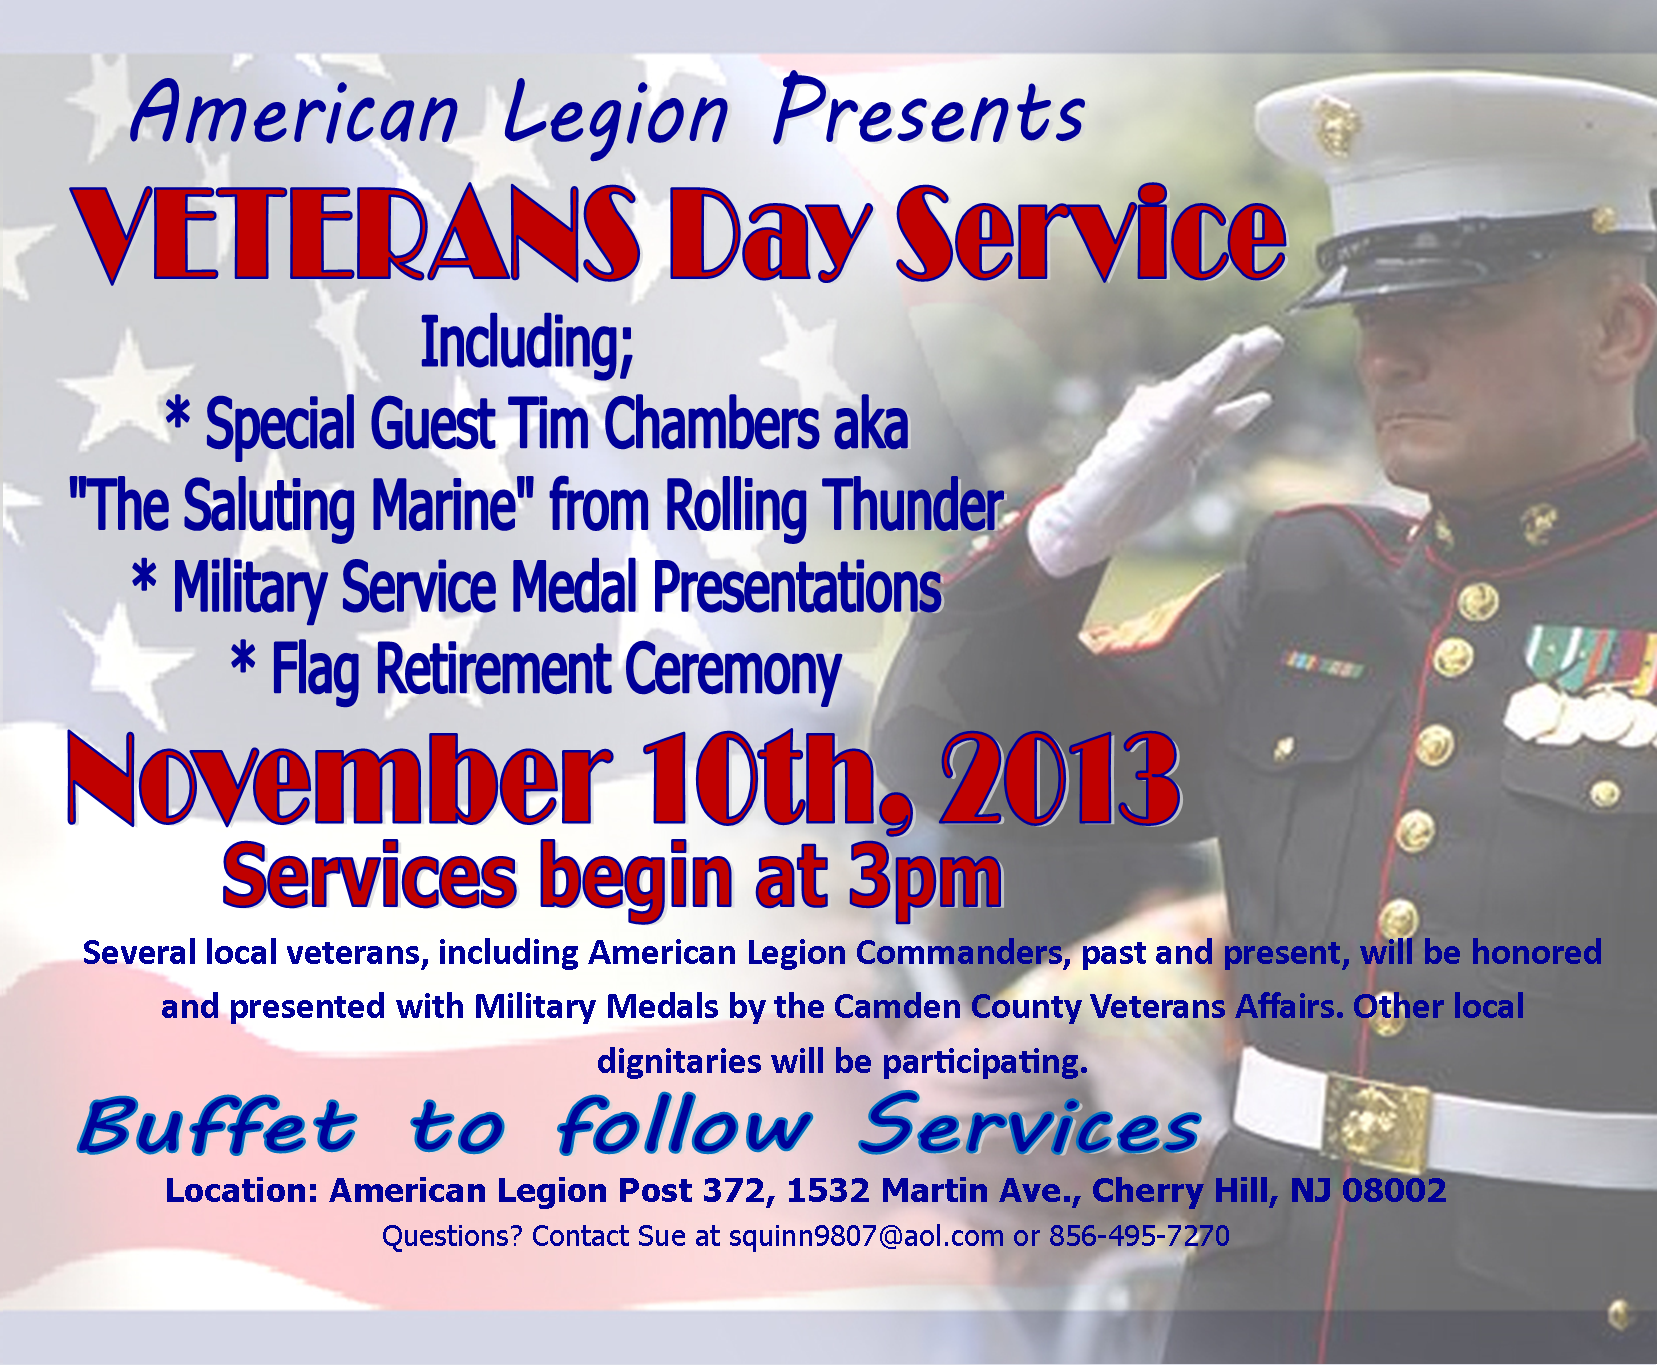 VETERANS DAY SERVICE and “The Saluting Marine” honoring veterans Sunday